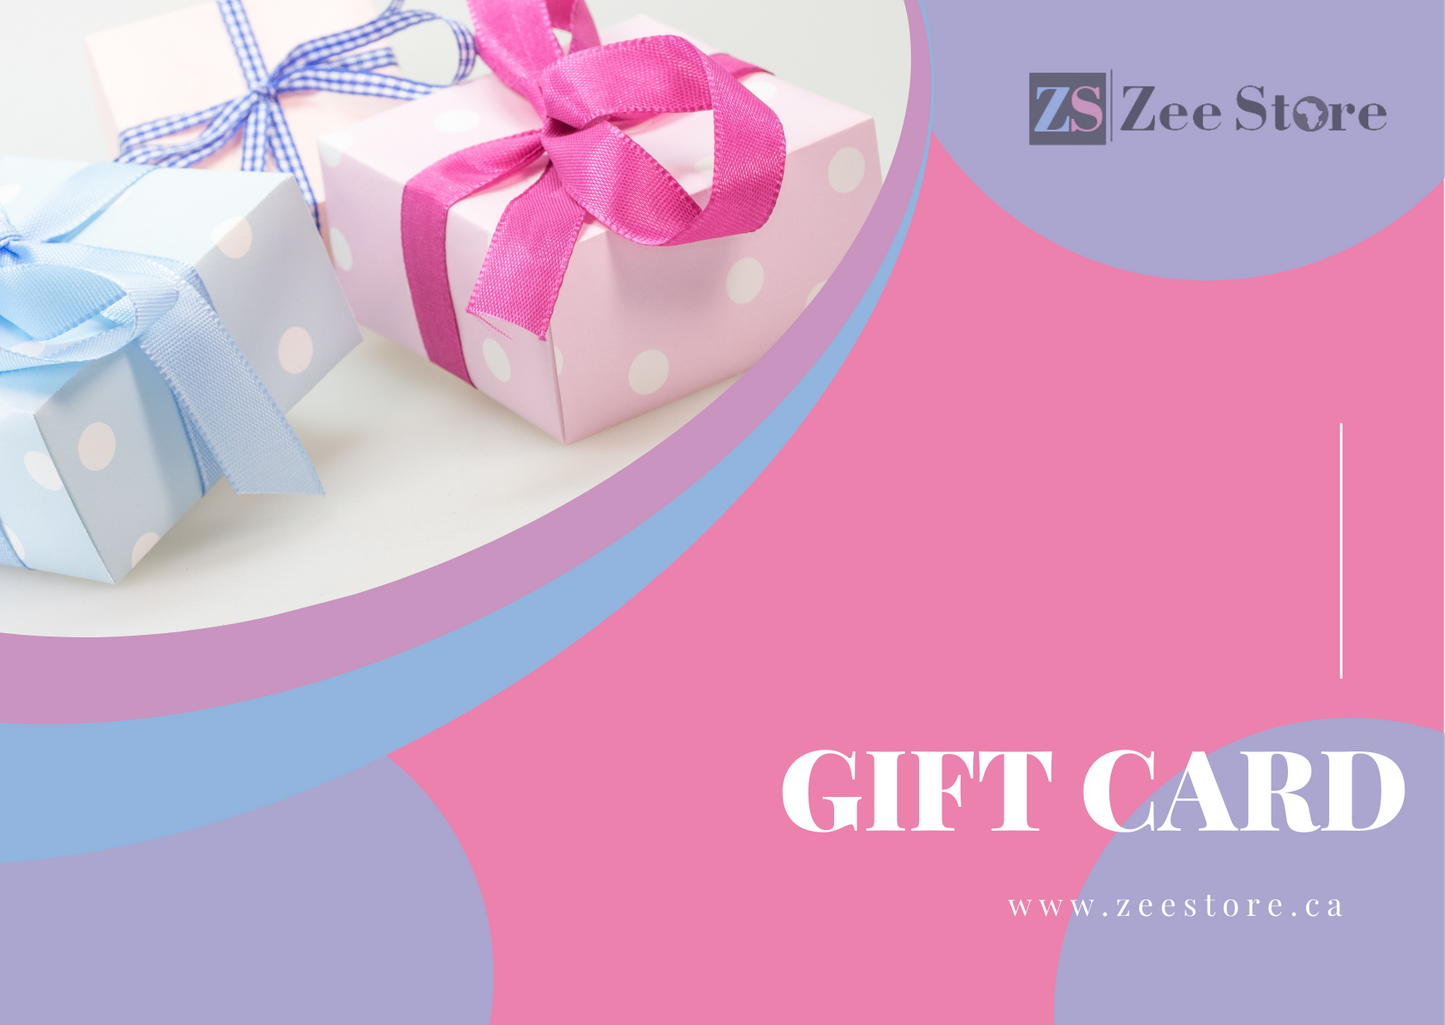 Zee Store Gift Card